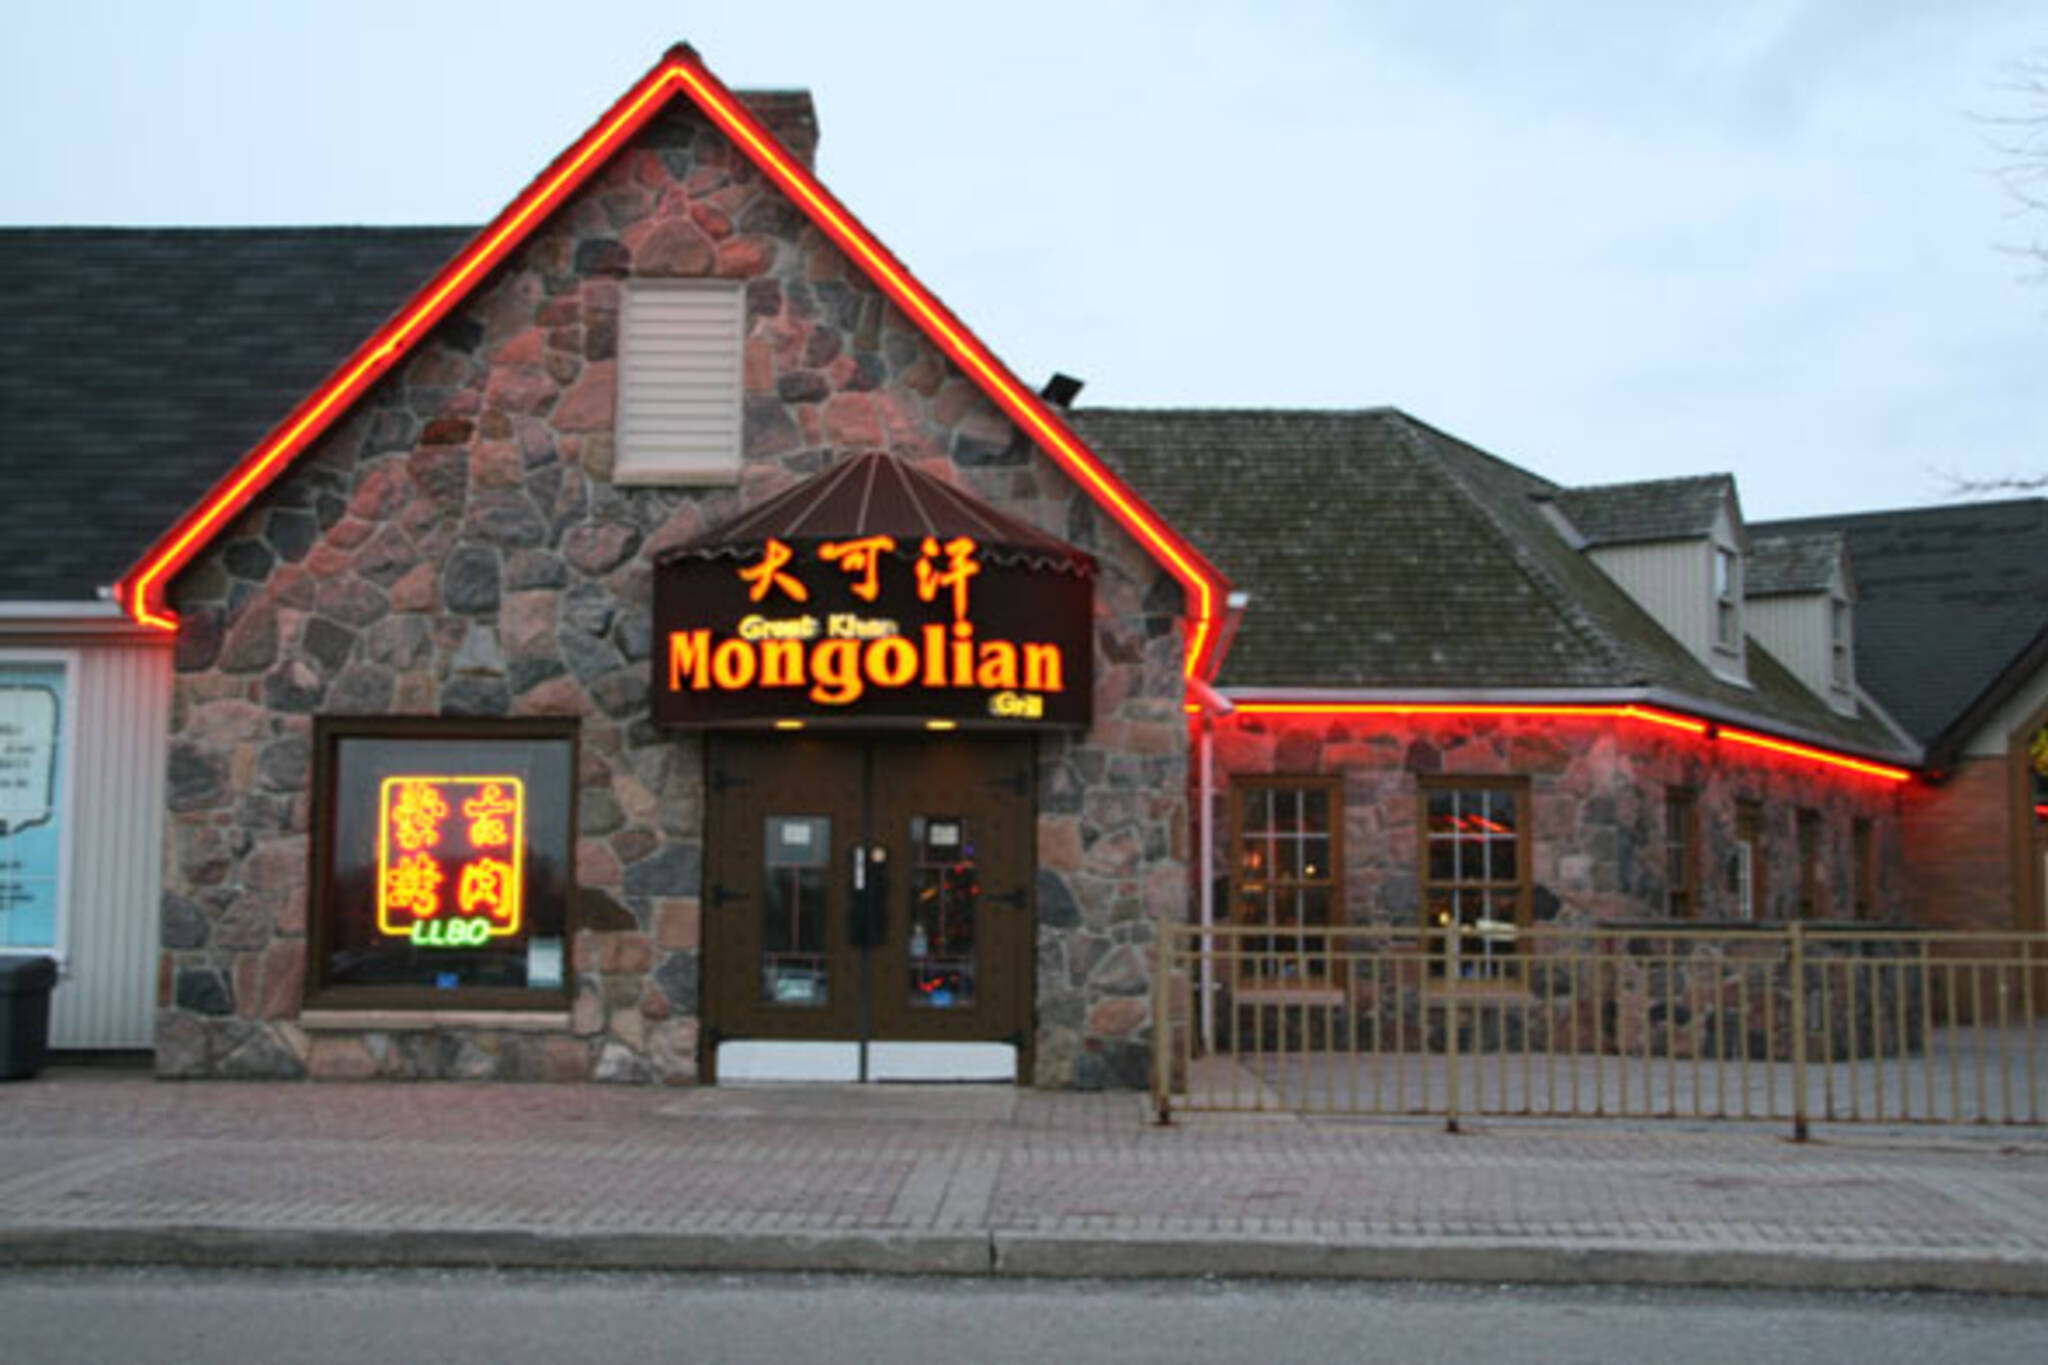 Great Khan Mongolian Grill